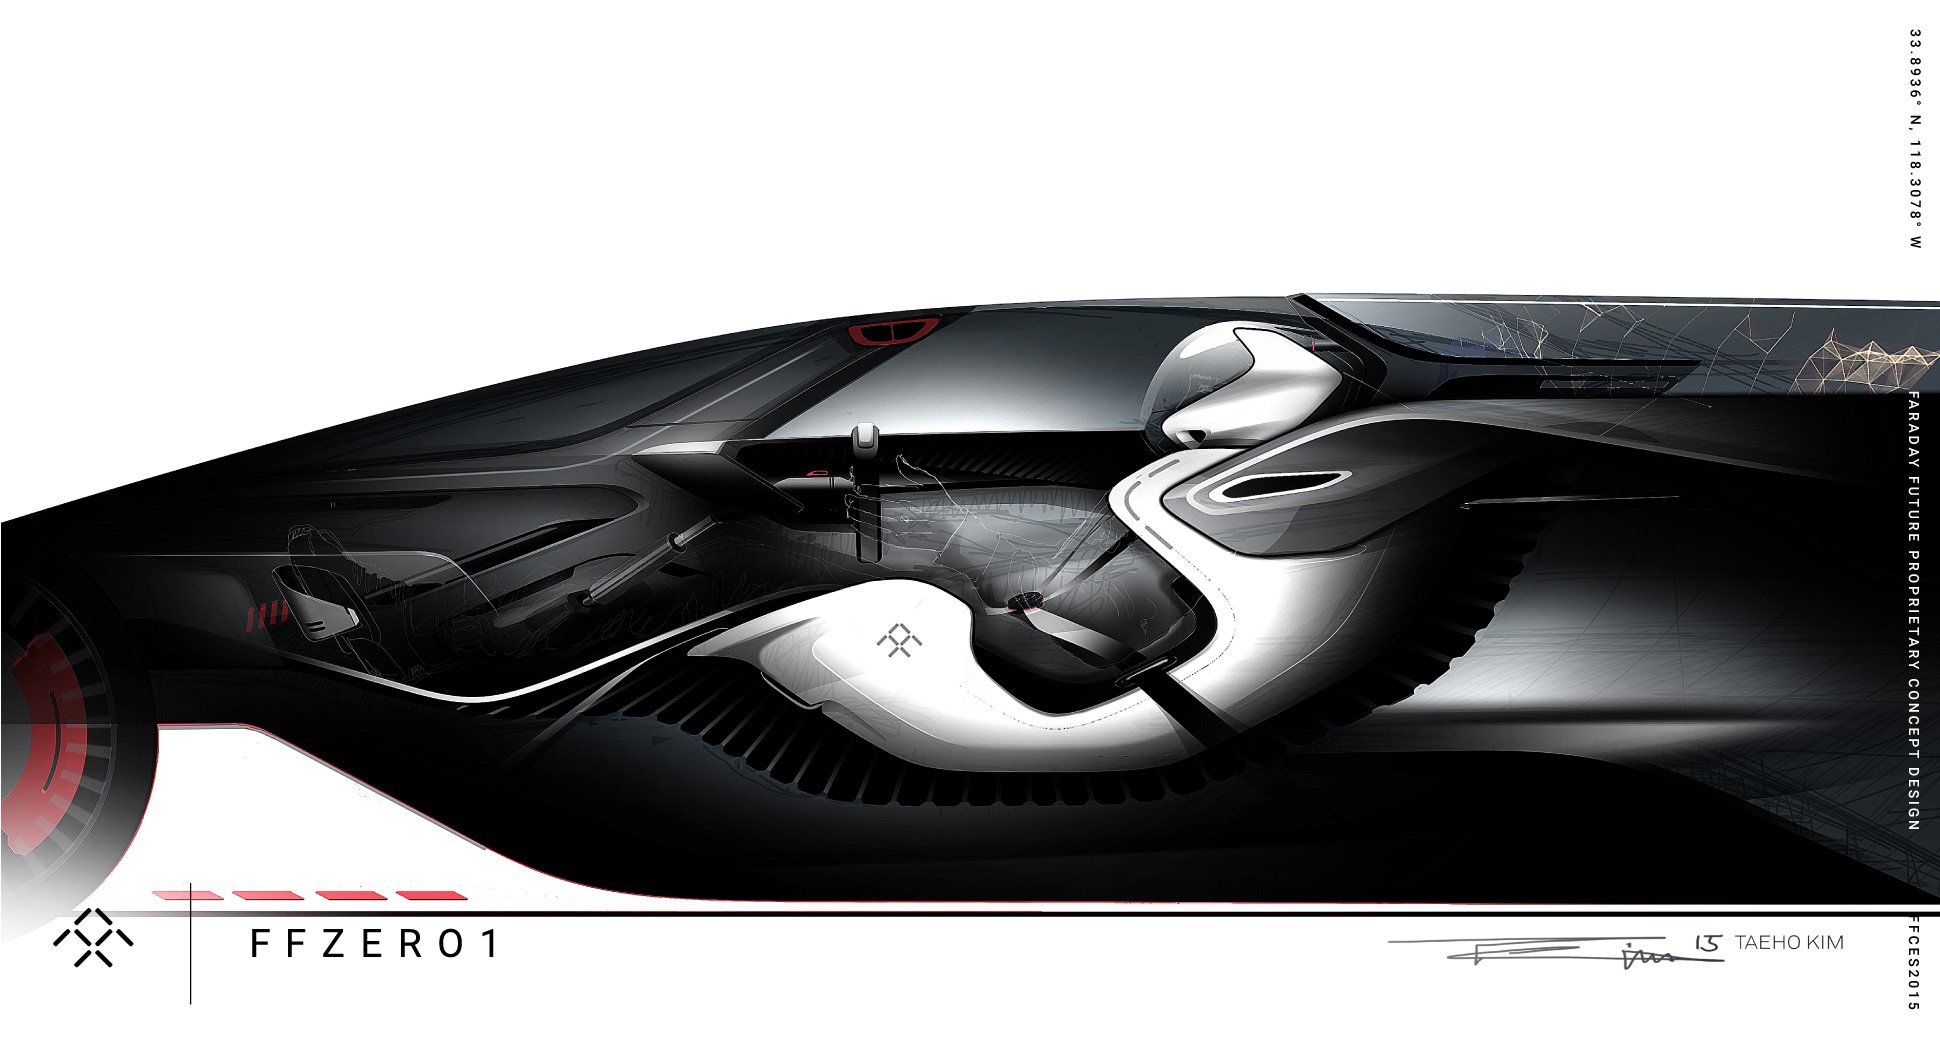 Nextgeneration Indiabound MercedesBenz GLE interior design sketches  revealed  CarWale